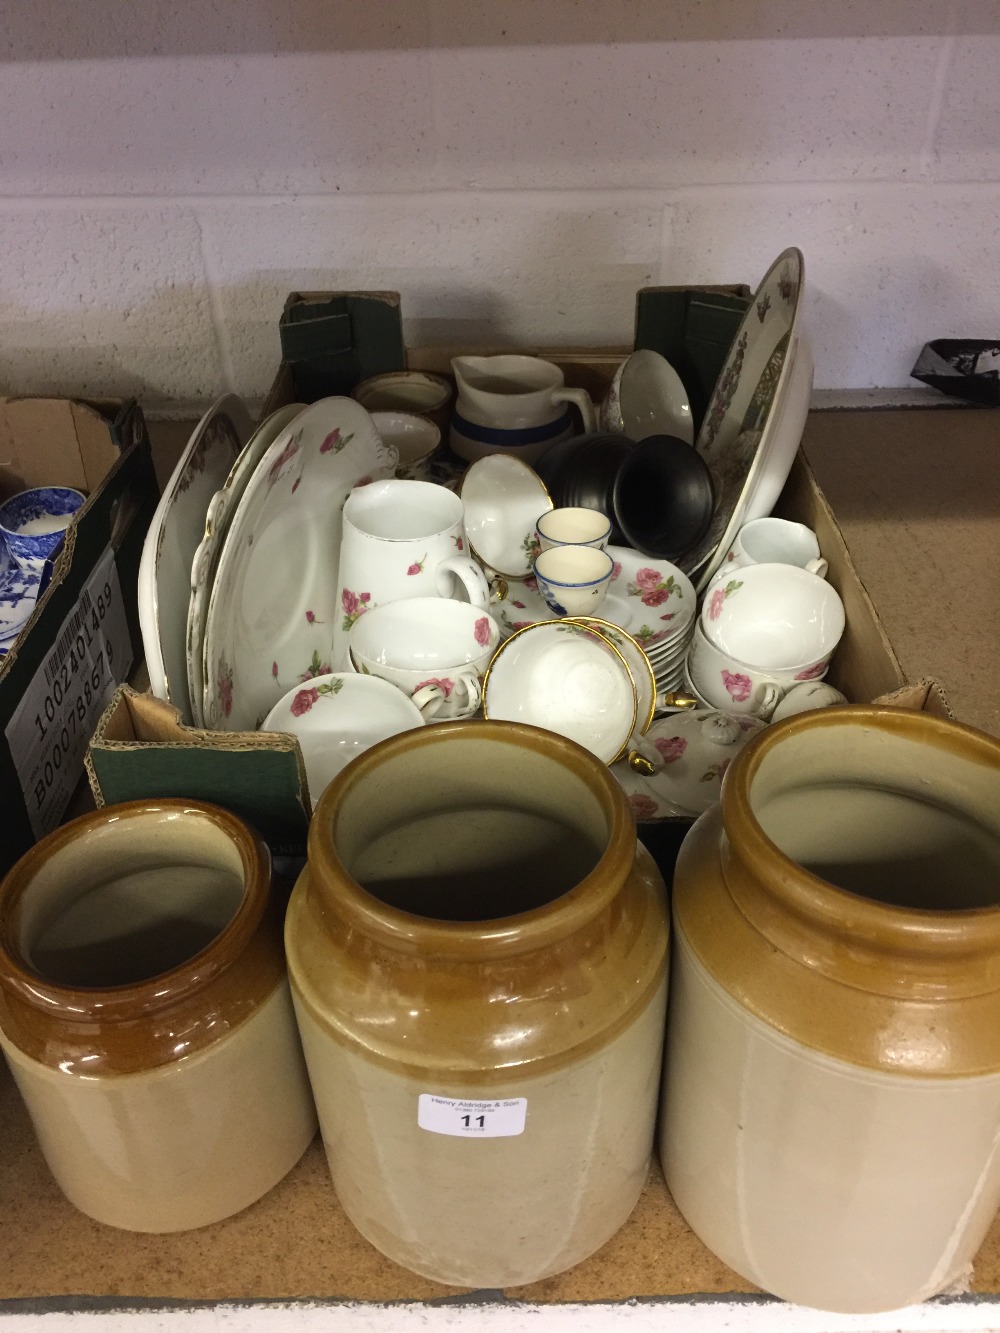 20th cent. Ceramics: Rose patterned half teaset, preserve jars, jugs, plates, etc.